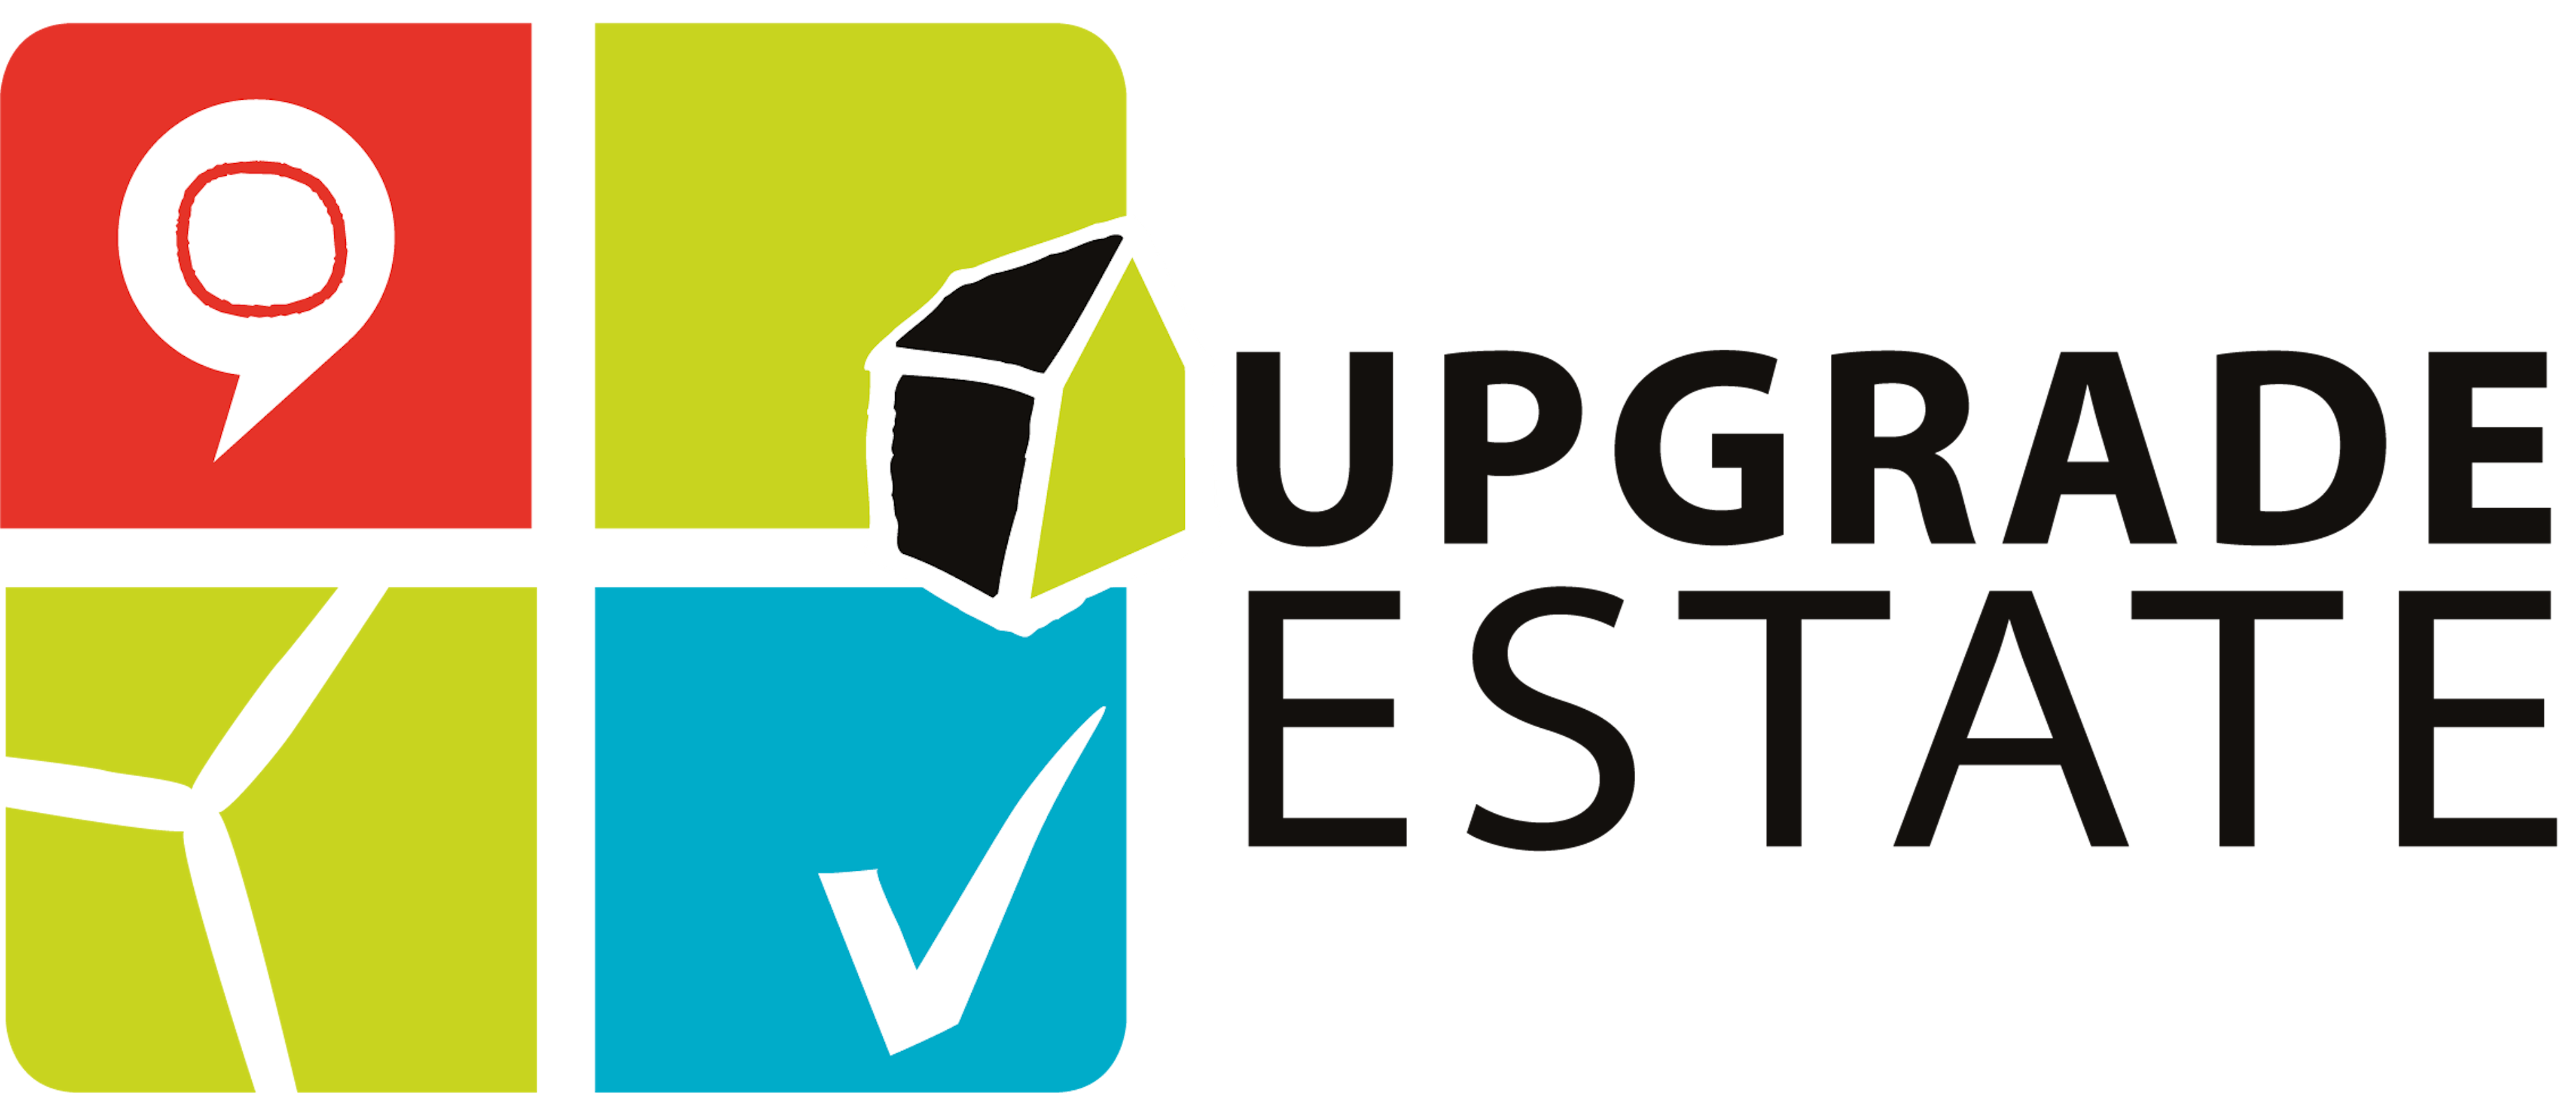 Upgrade Estate logo